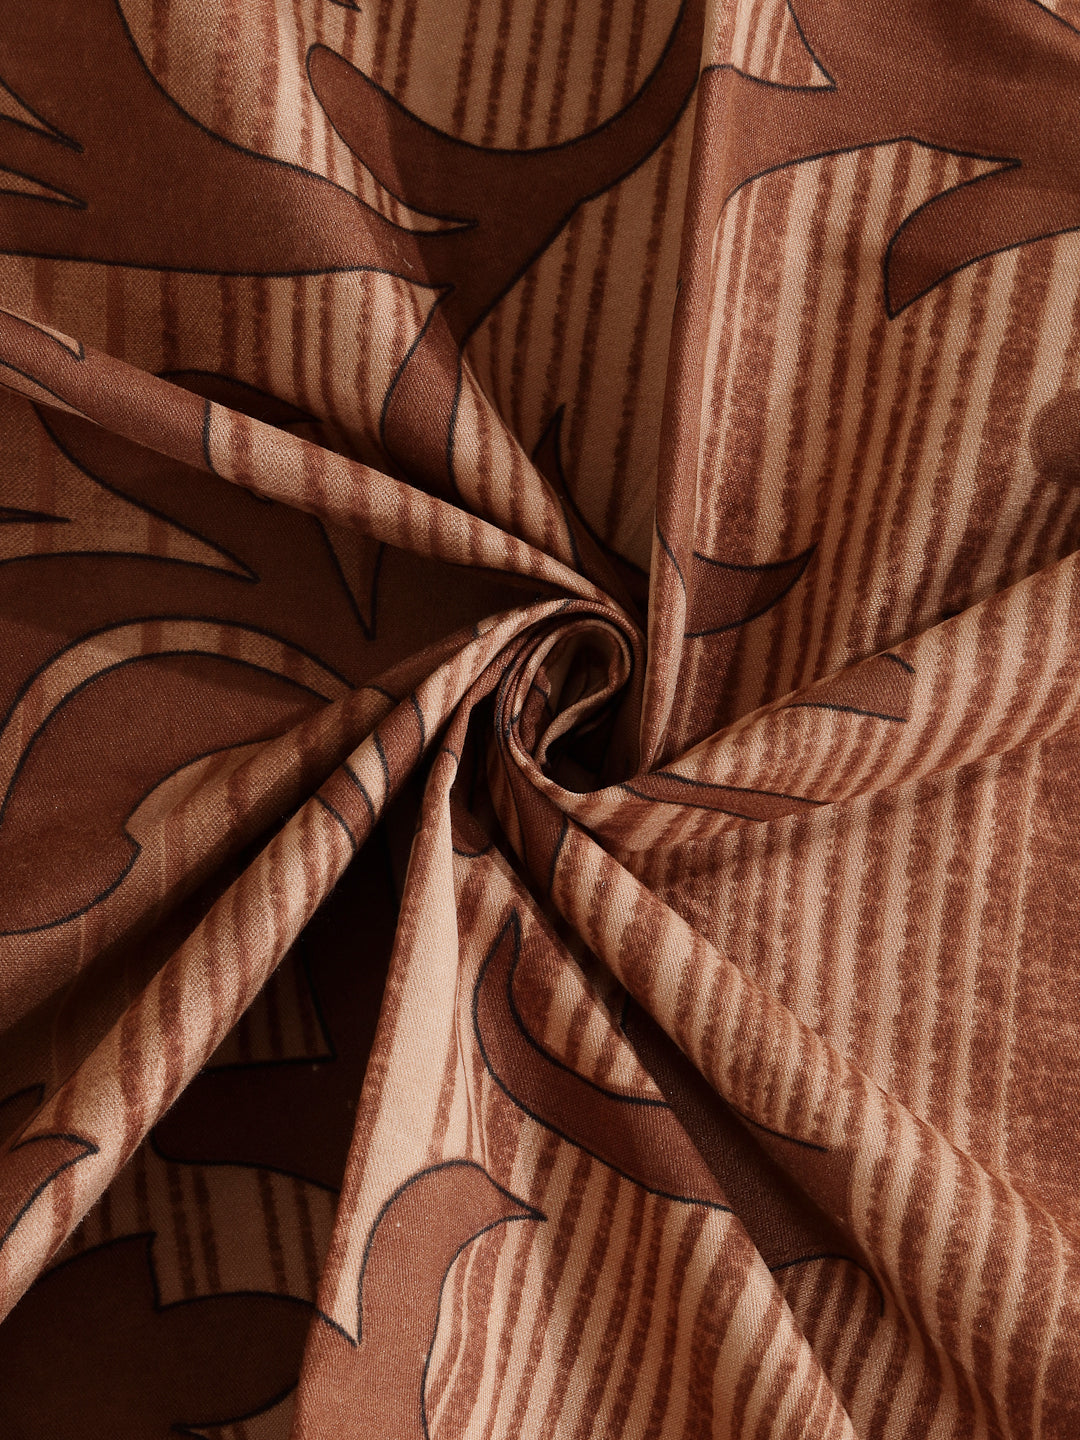 Arrabi Brown Leaf Cotton Blend 8 SEATER Table Cover (215 x 150 cm)